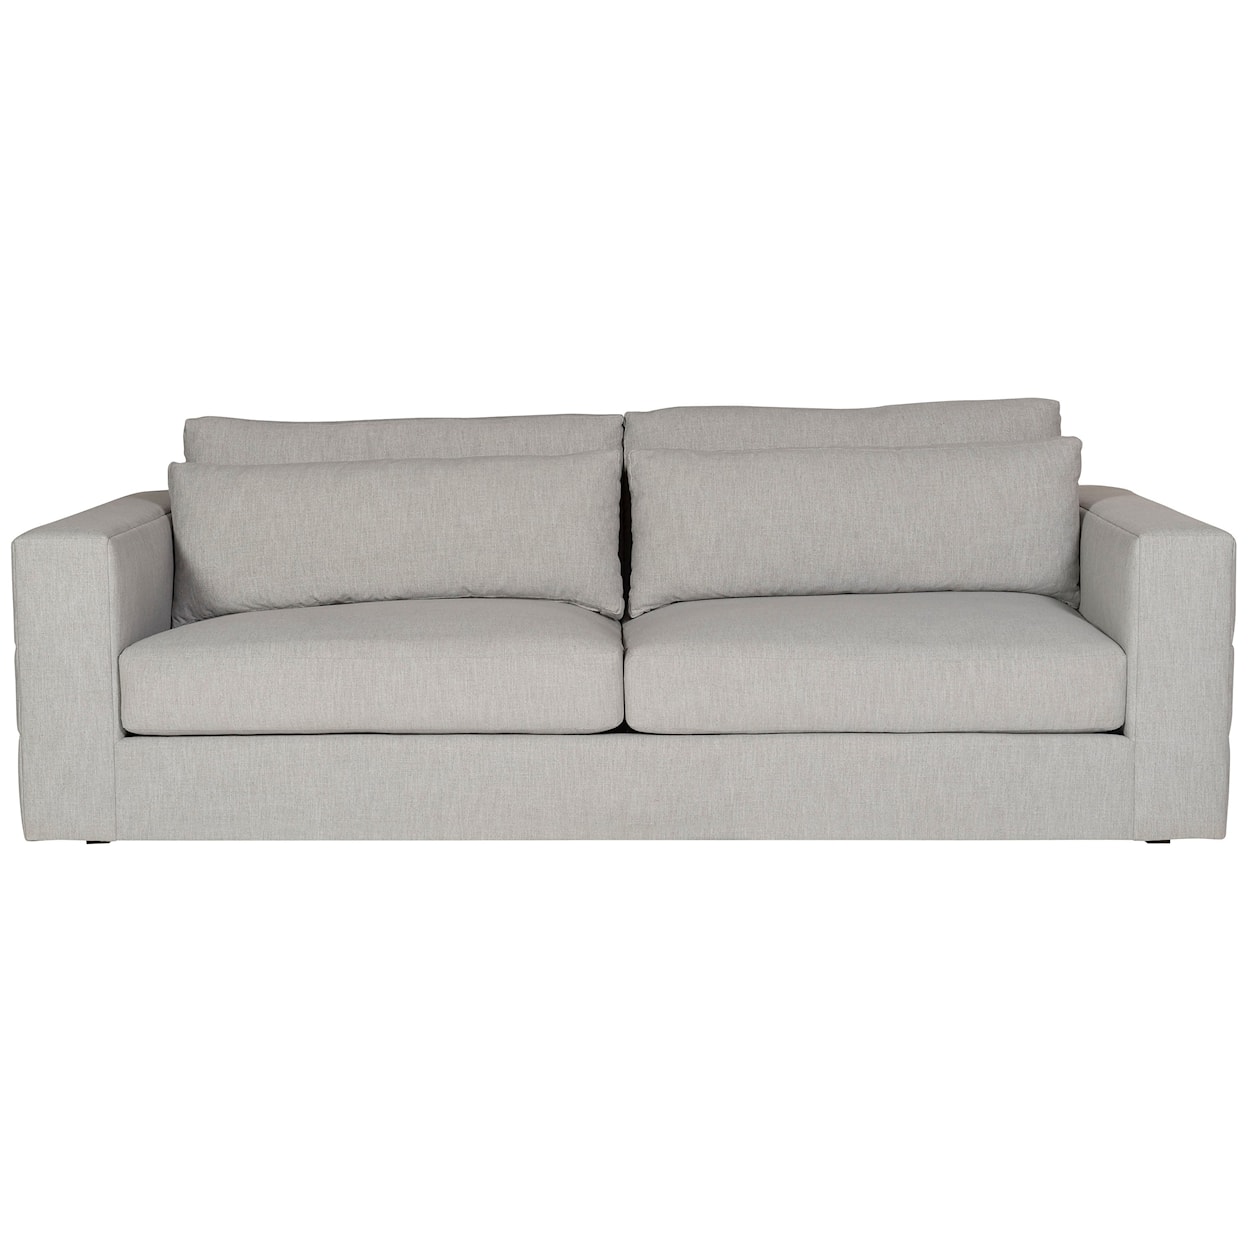 Vanguard Furniture Leone Sofa